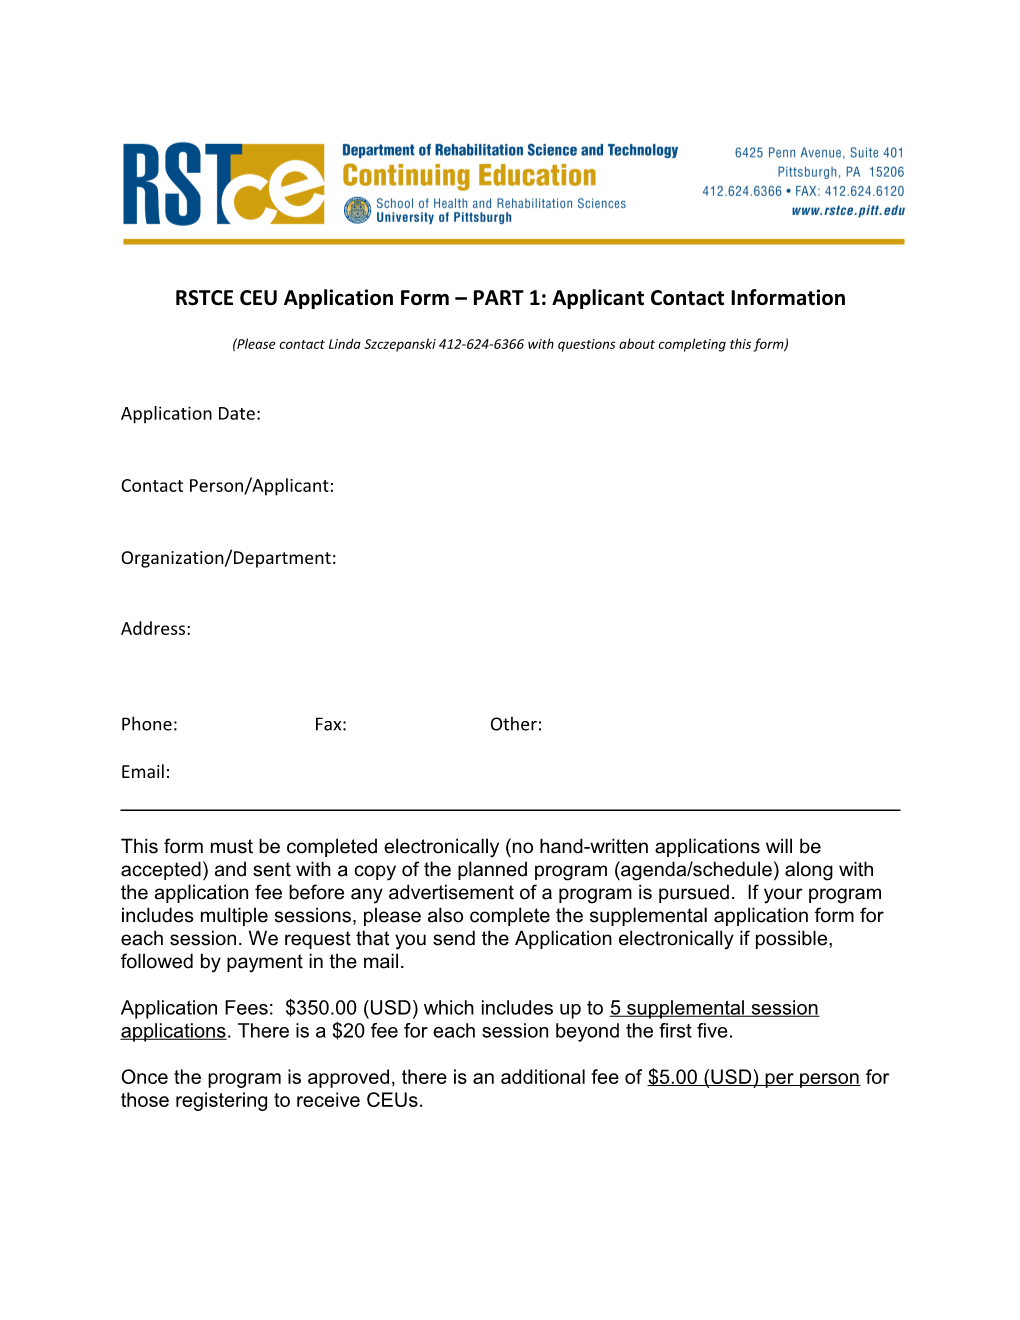 RSTCE CEU Application Form PART 1: Applicant Contact Information